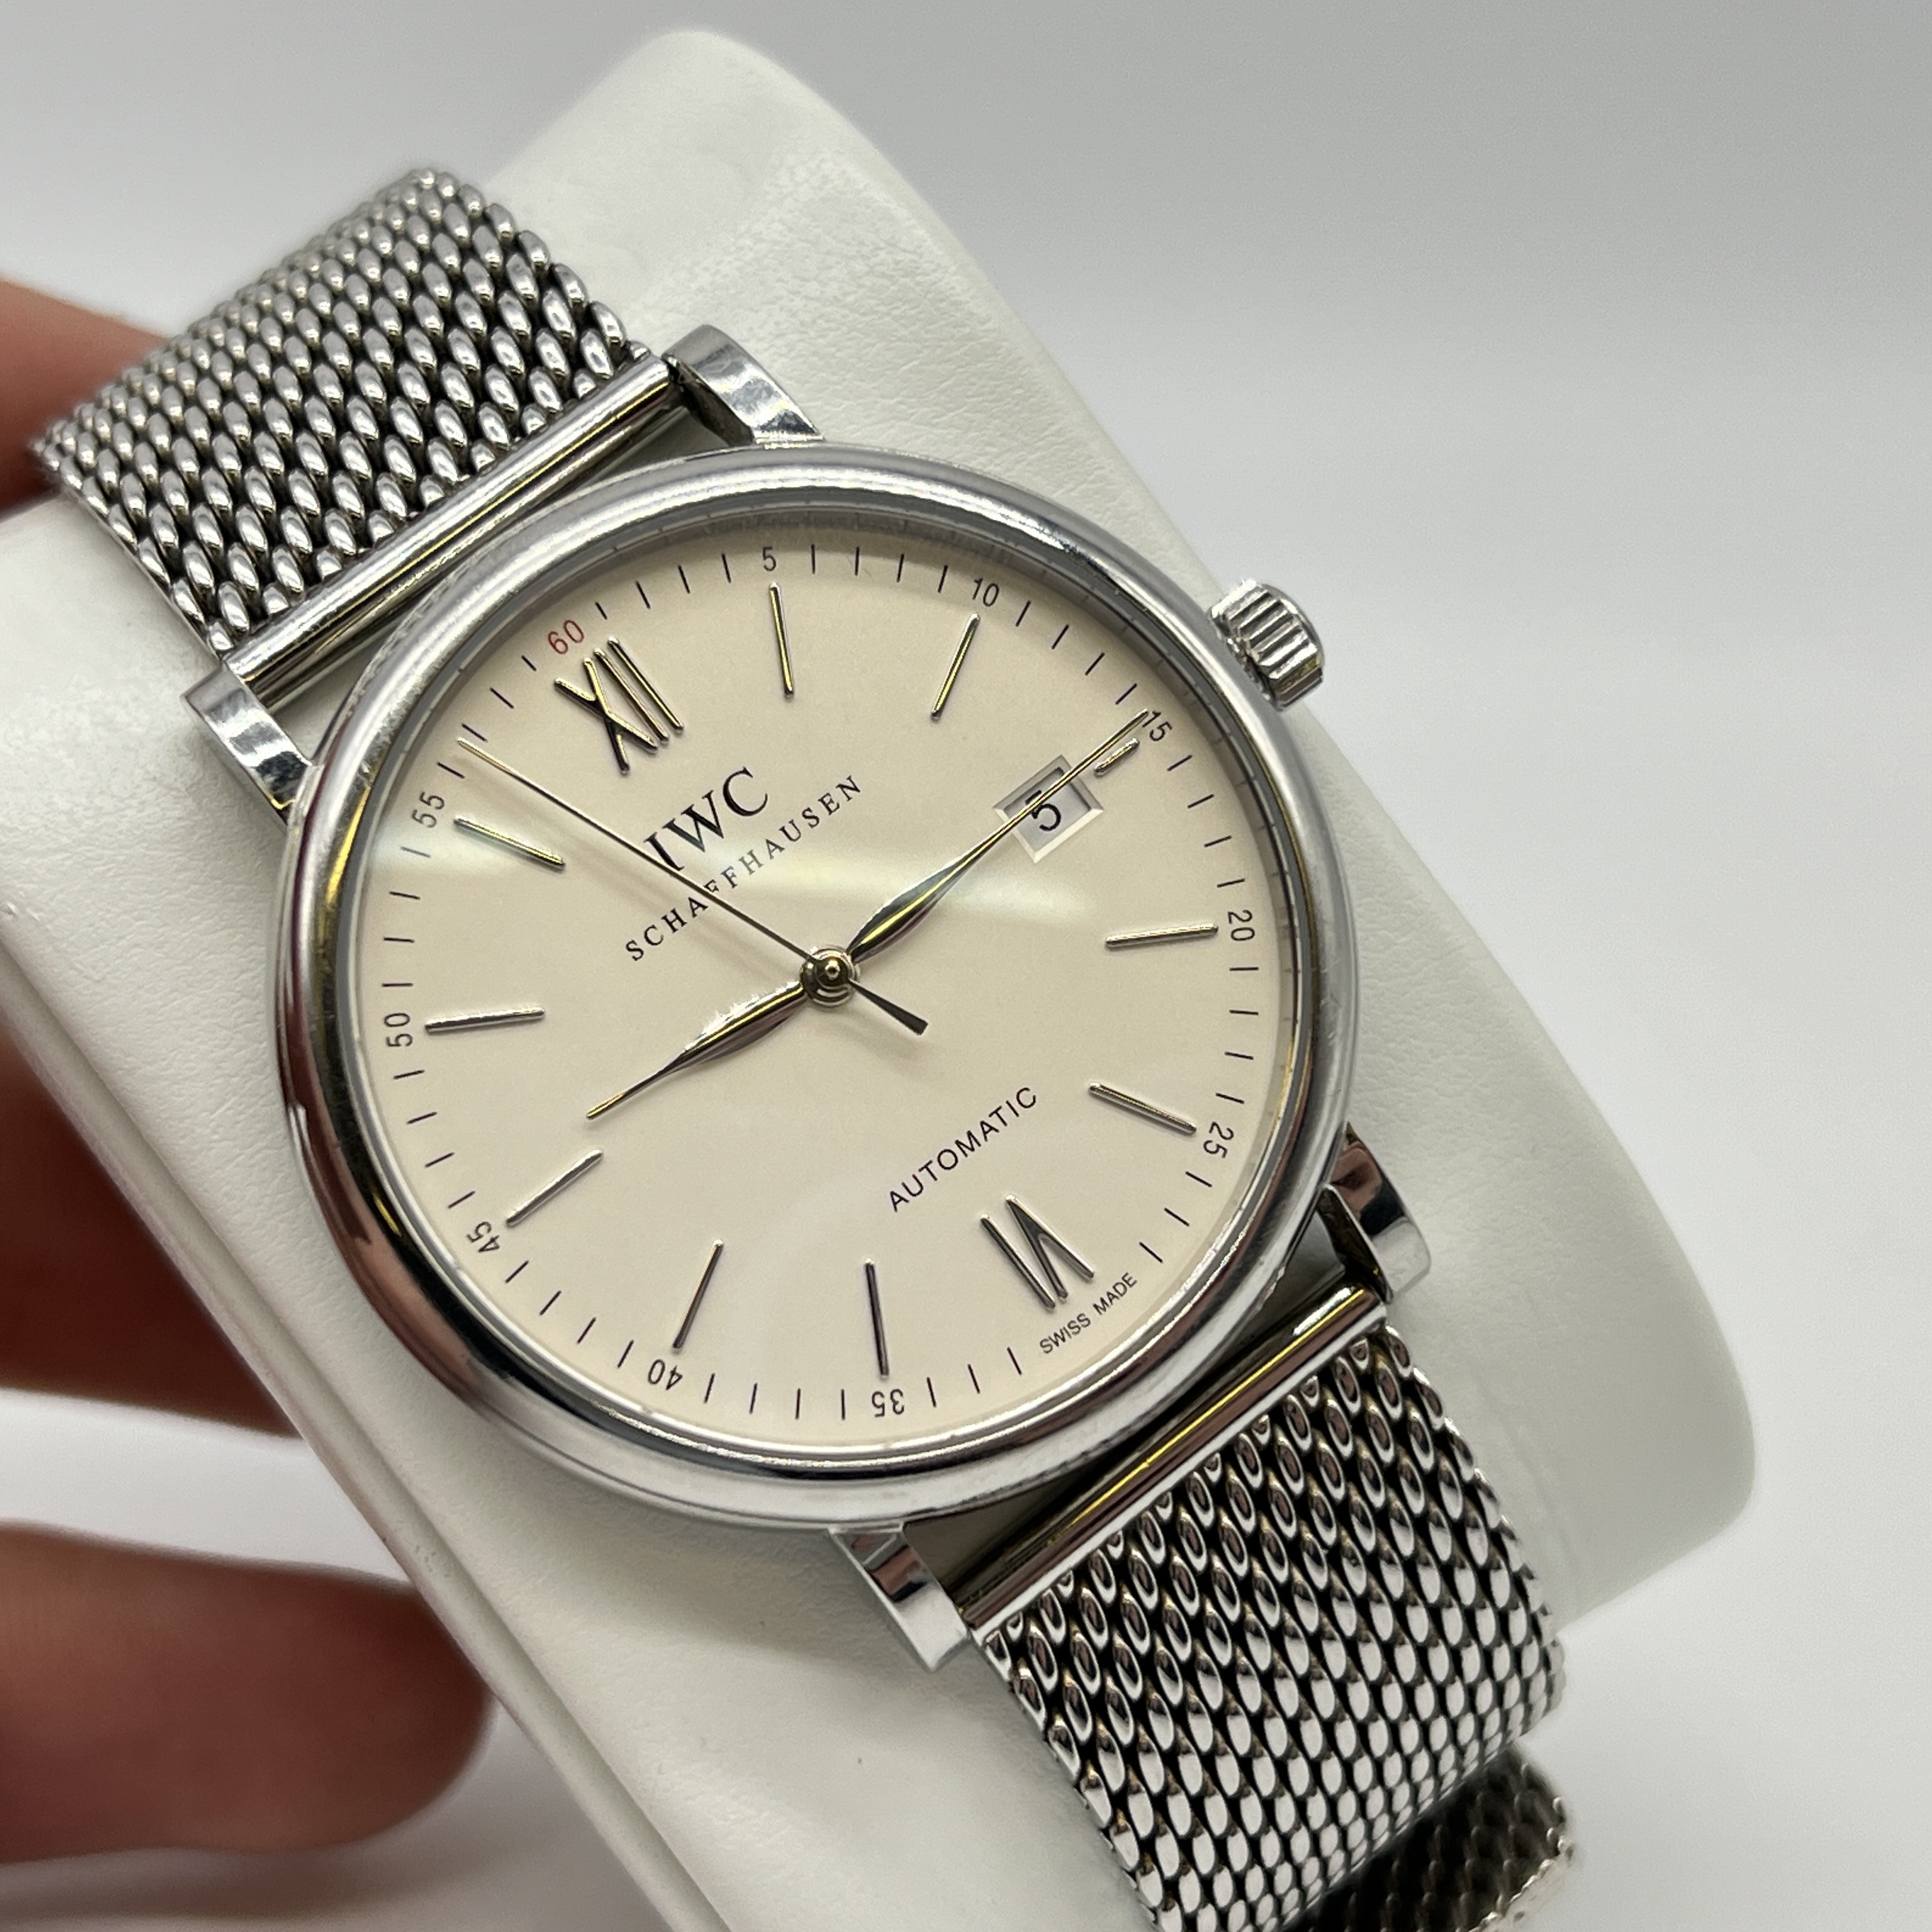 A Gents IWC Schaffhausen Portofino Automatic Watch - Image 6 of 11